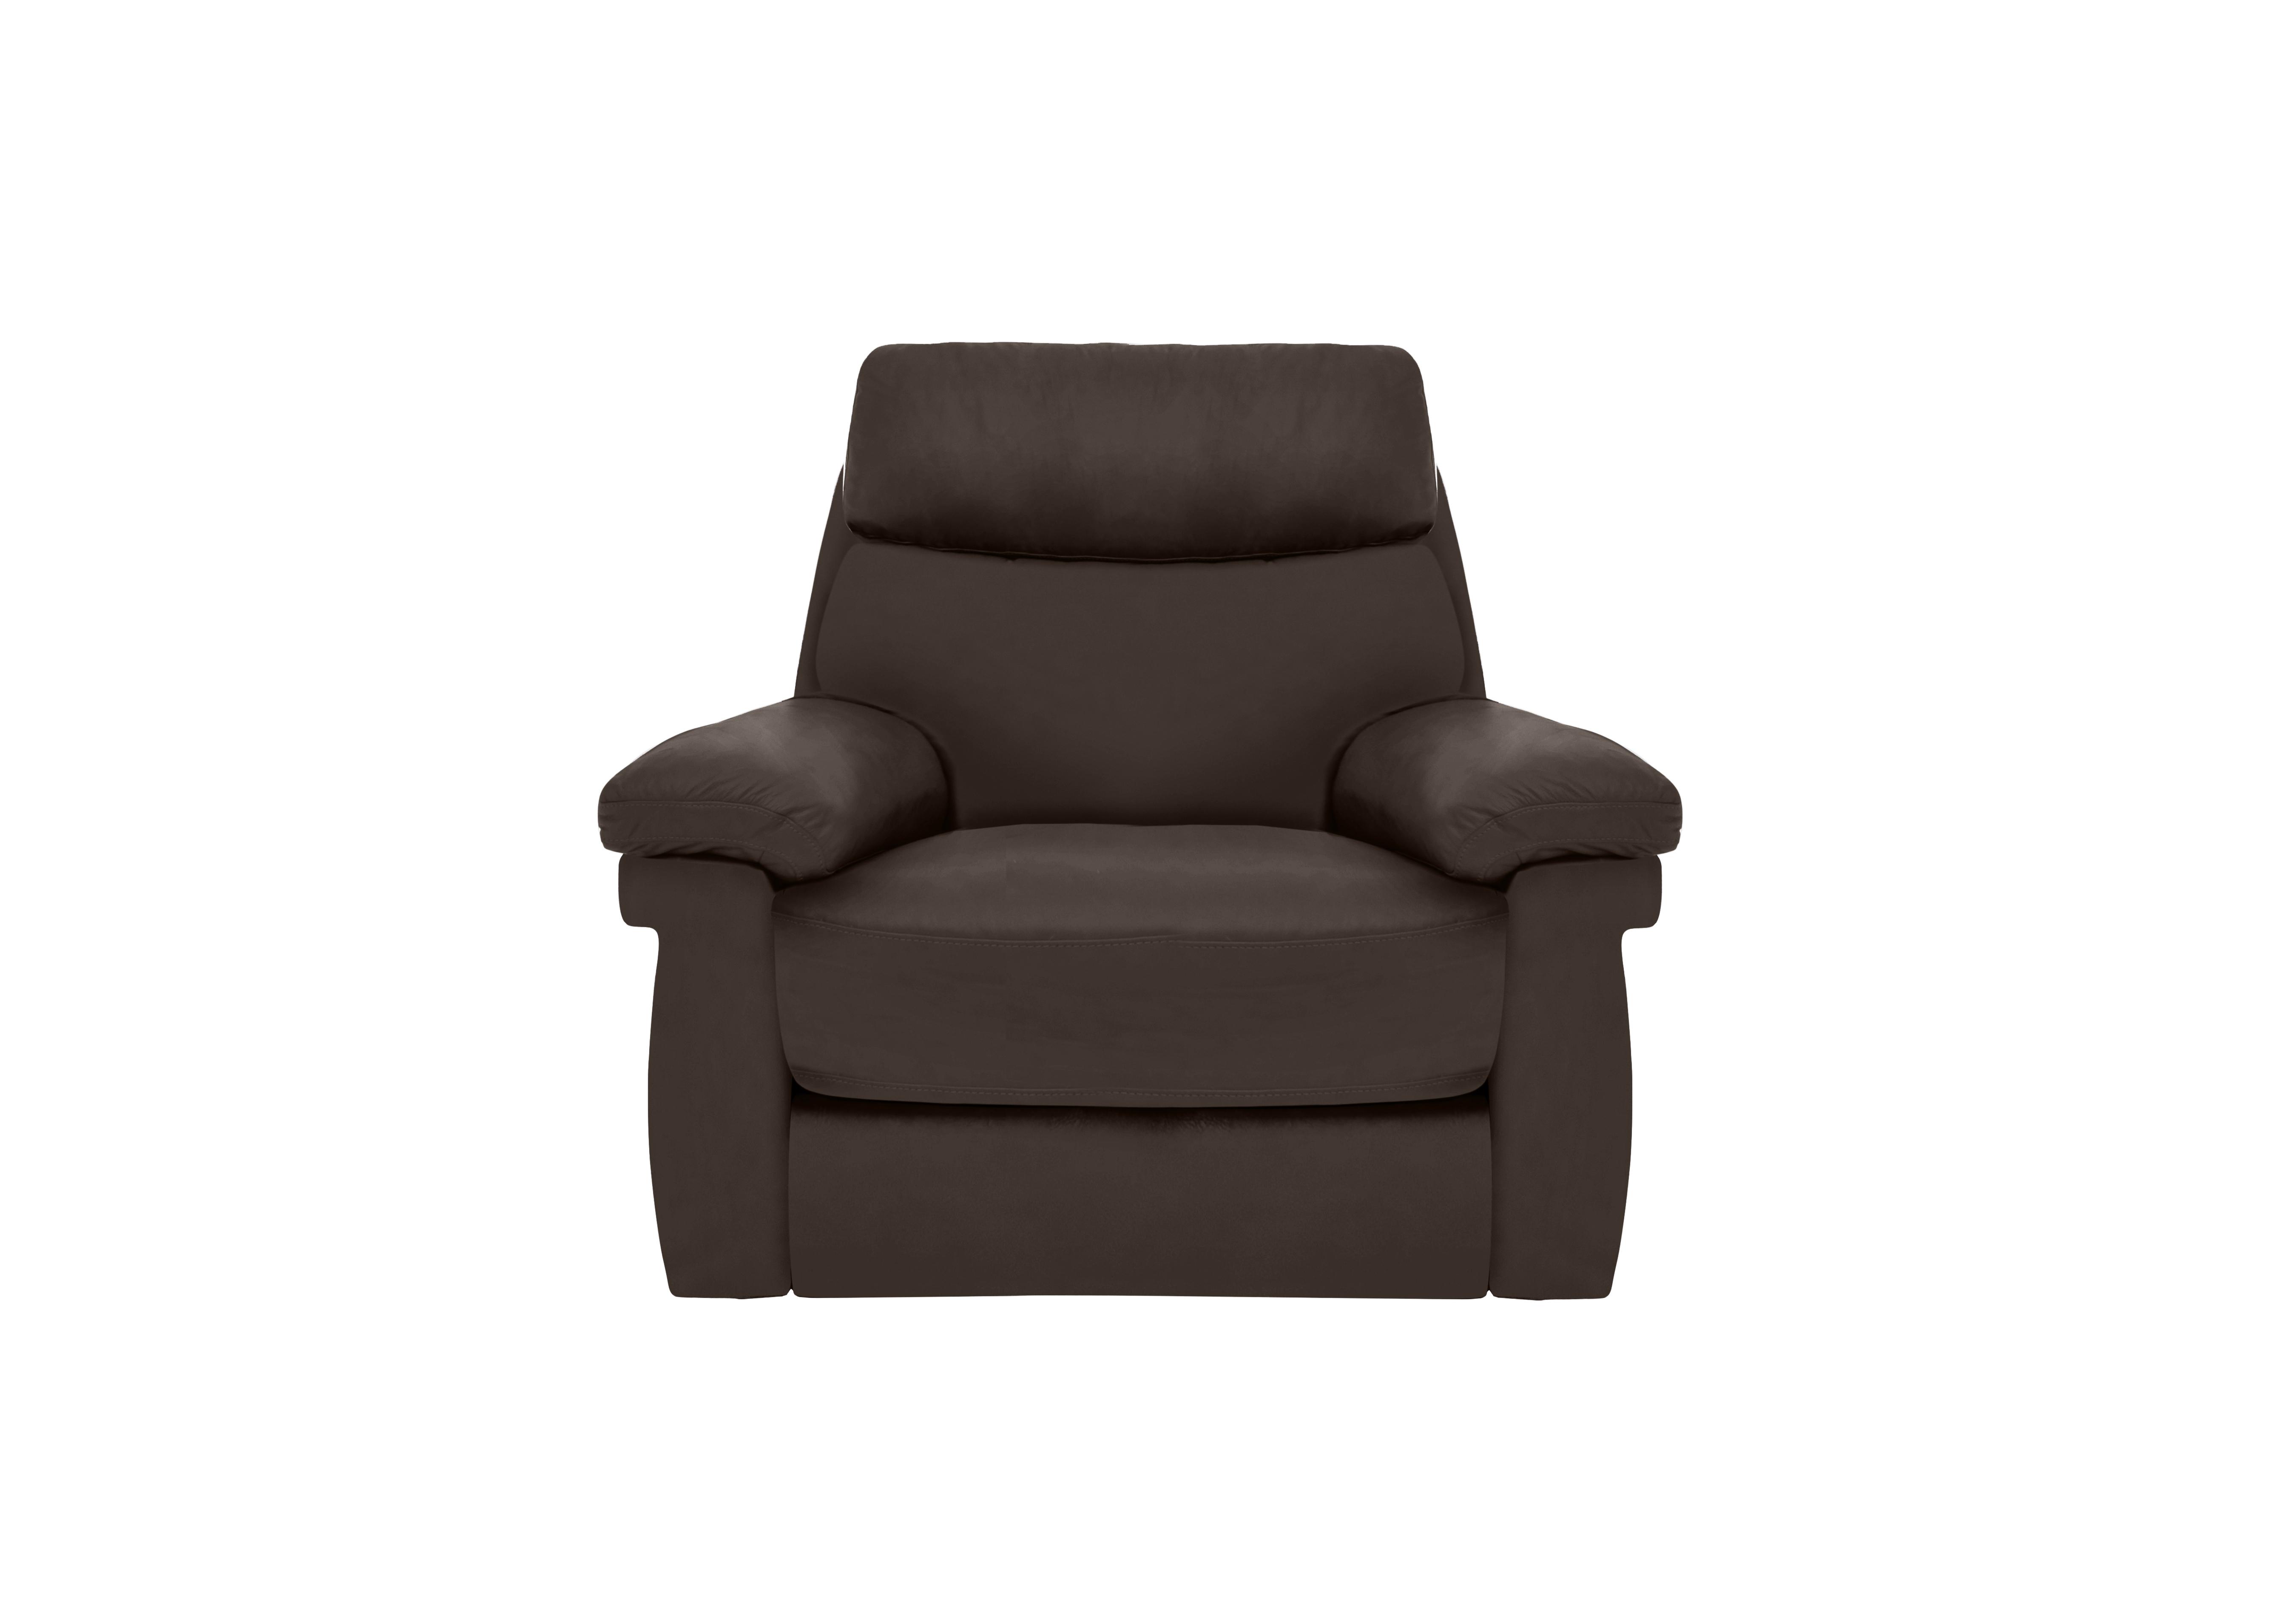 Serene Leather Chair in Bx-037c Walnut on Furniture Village